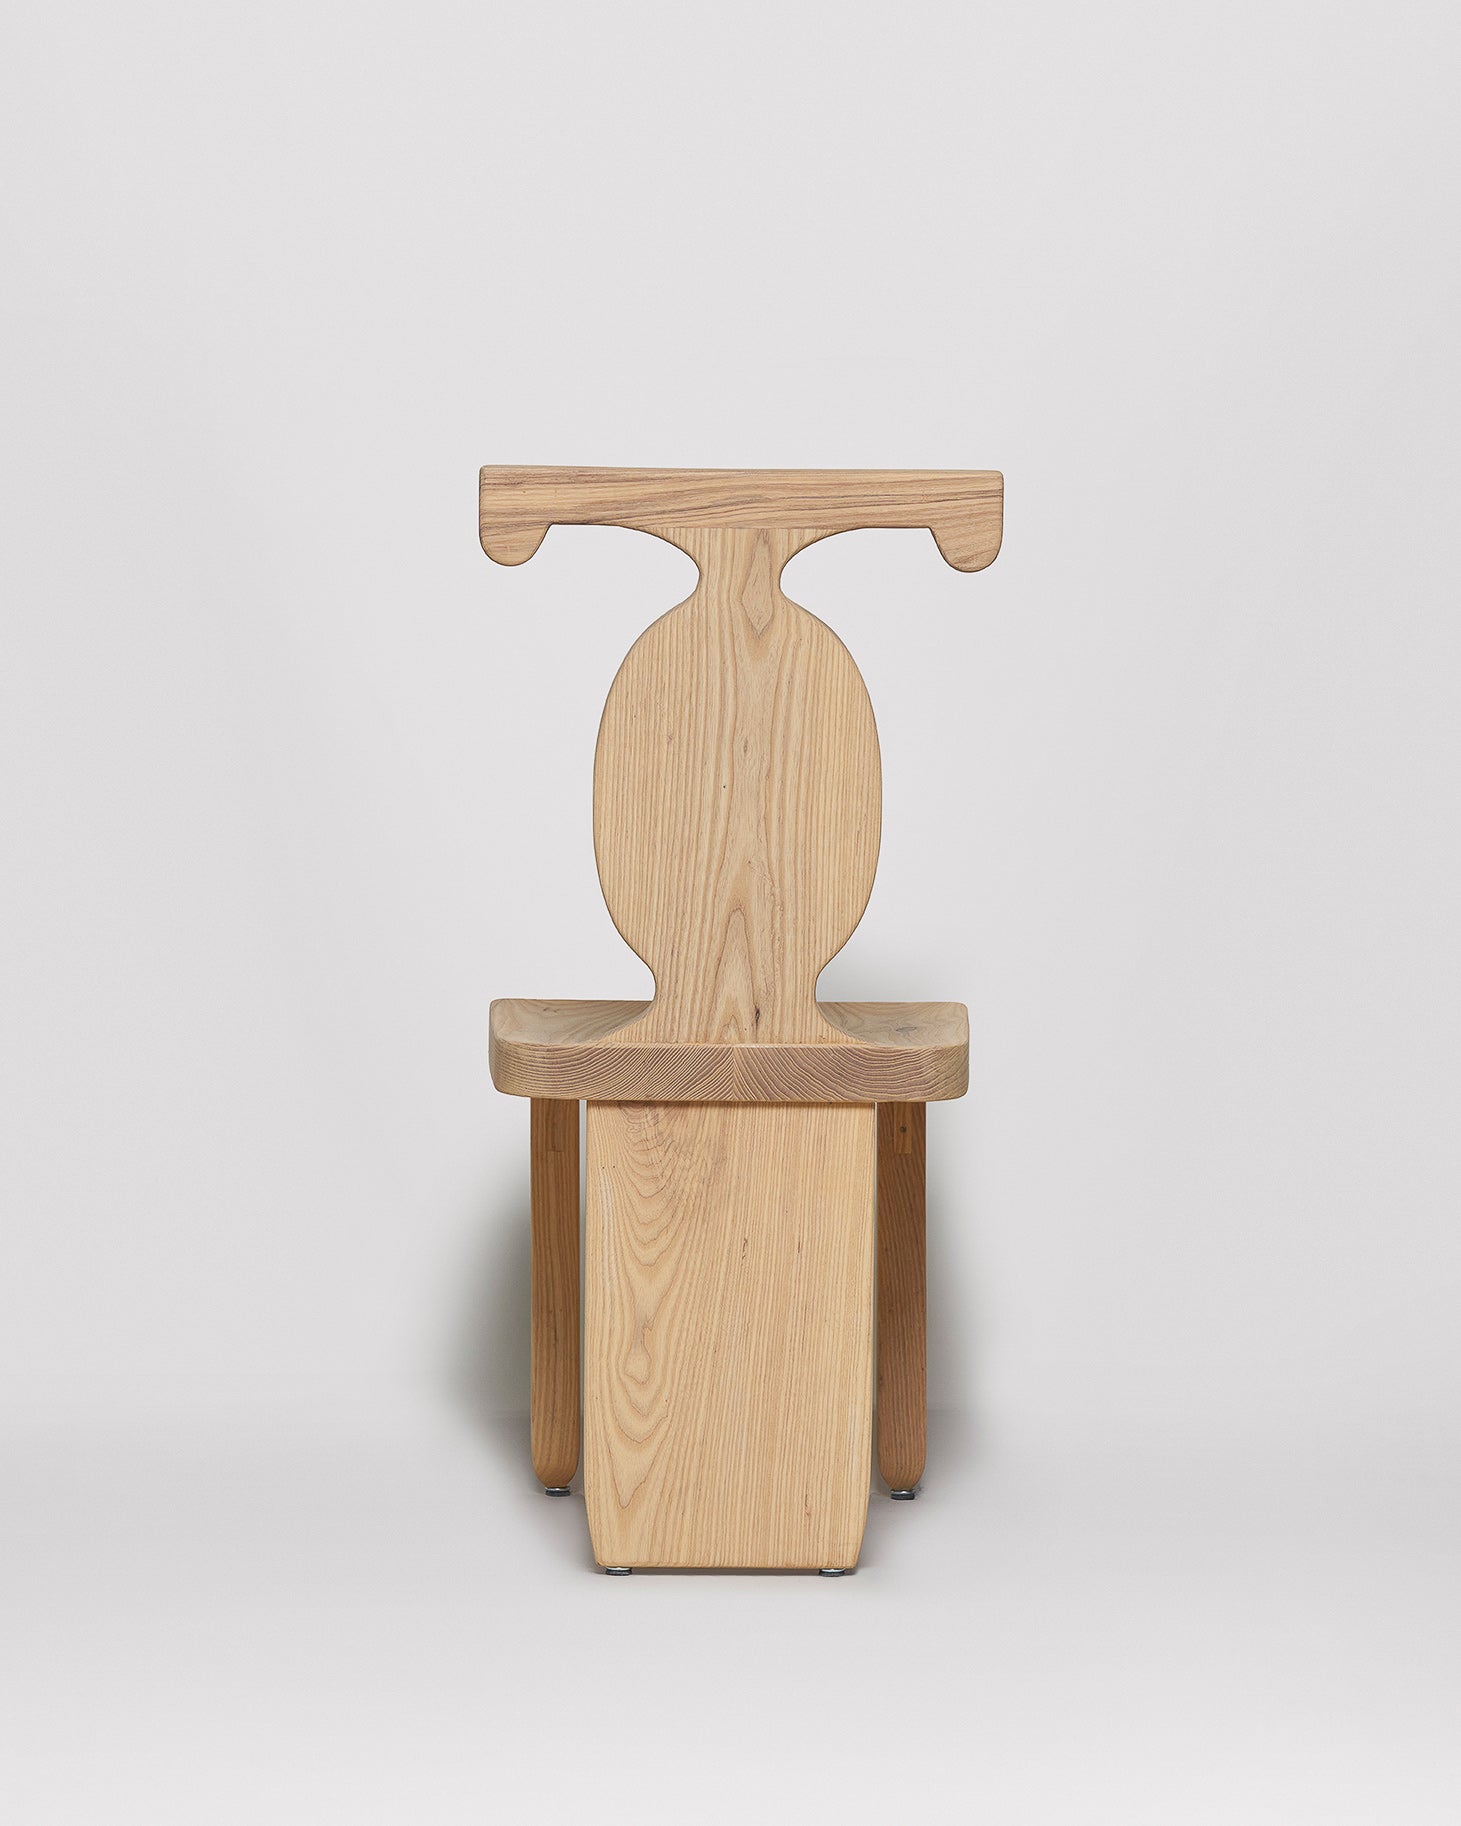 Sculptural African wooden chair in natural Ash